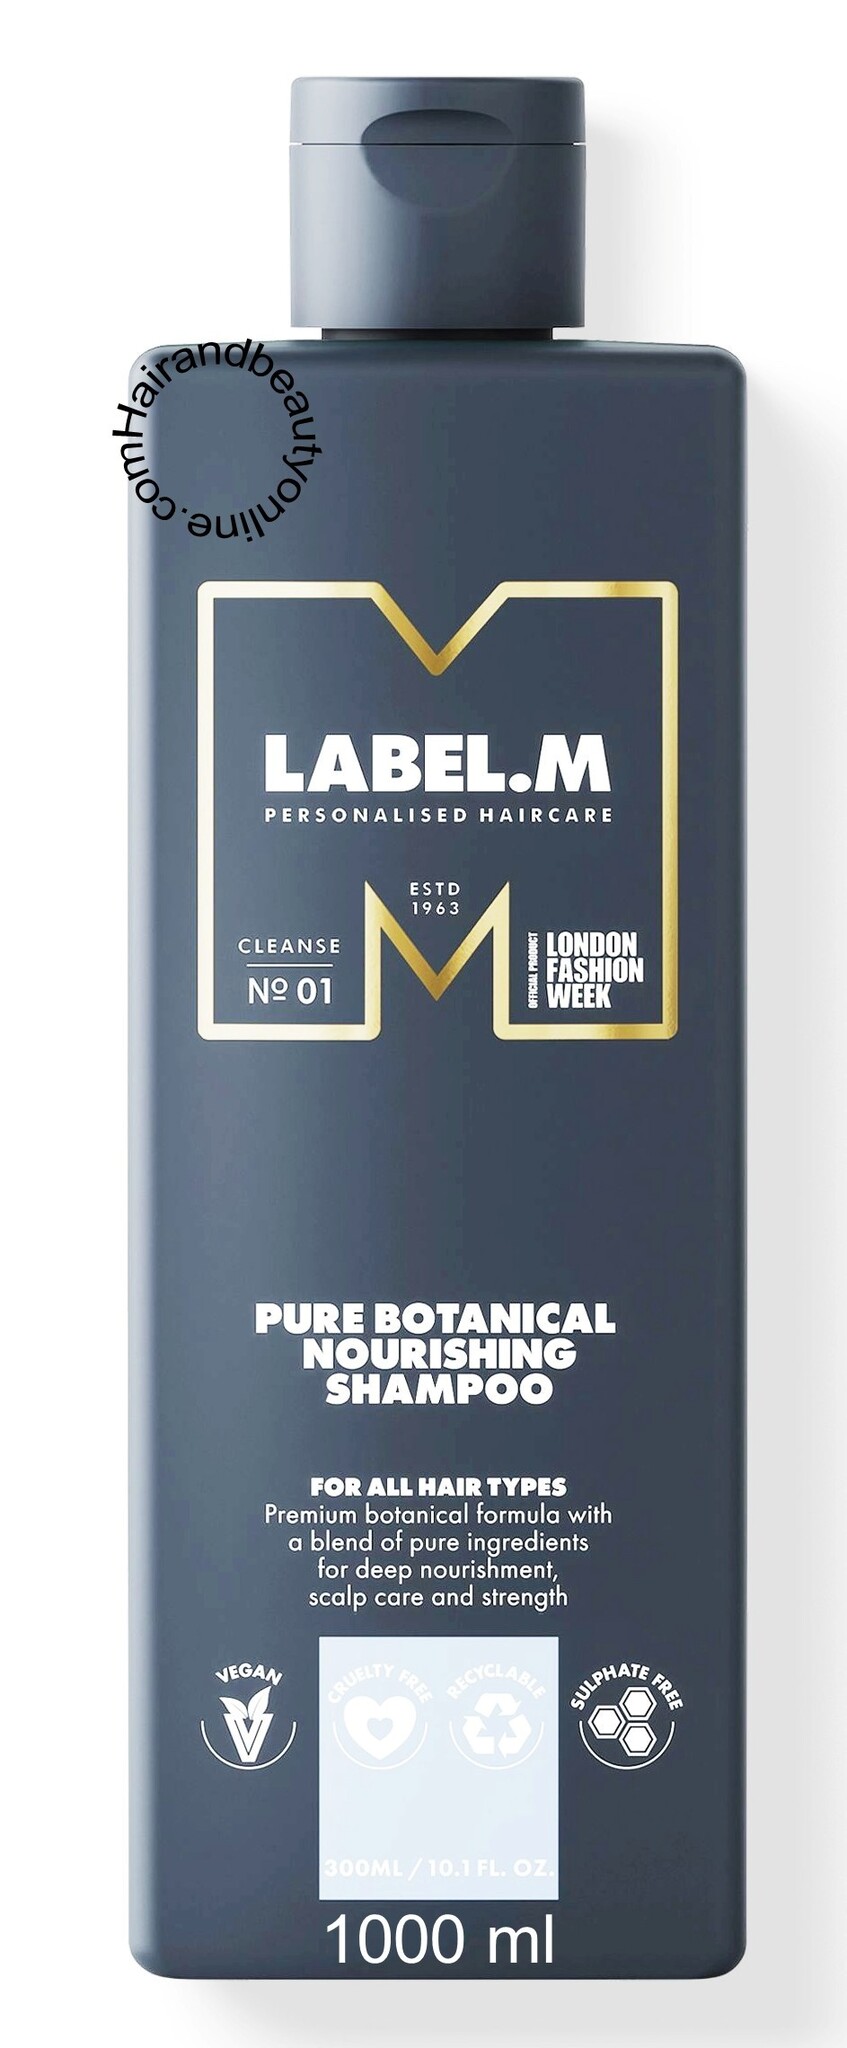 Label.m Pure Botanical Nourishing Shampoo 1000ml